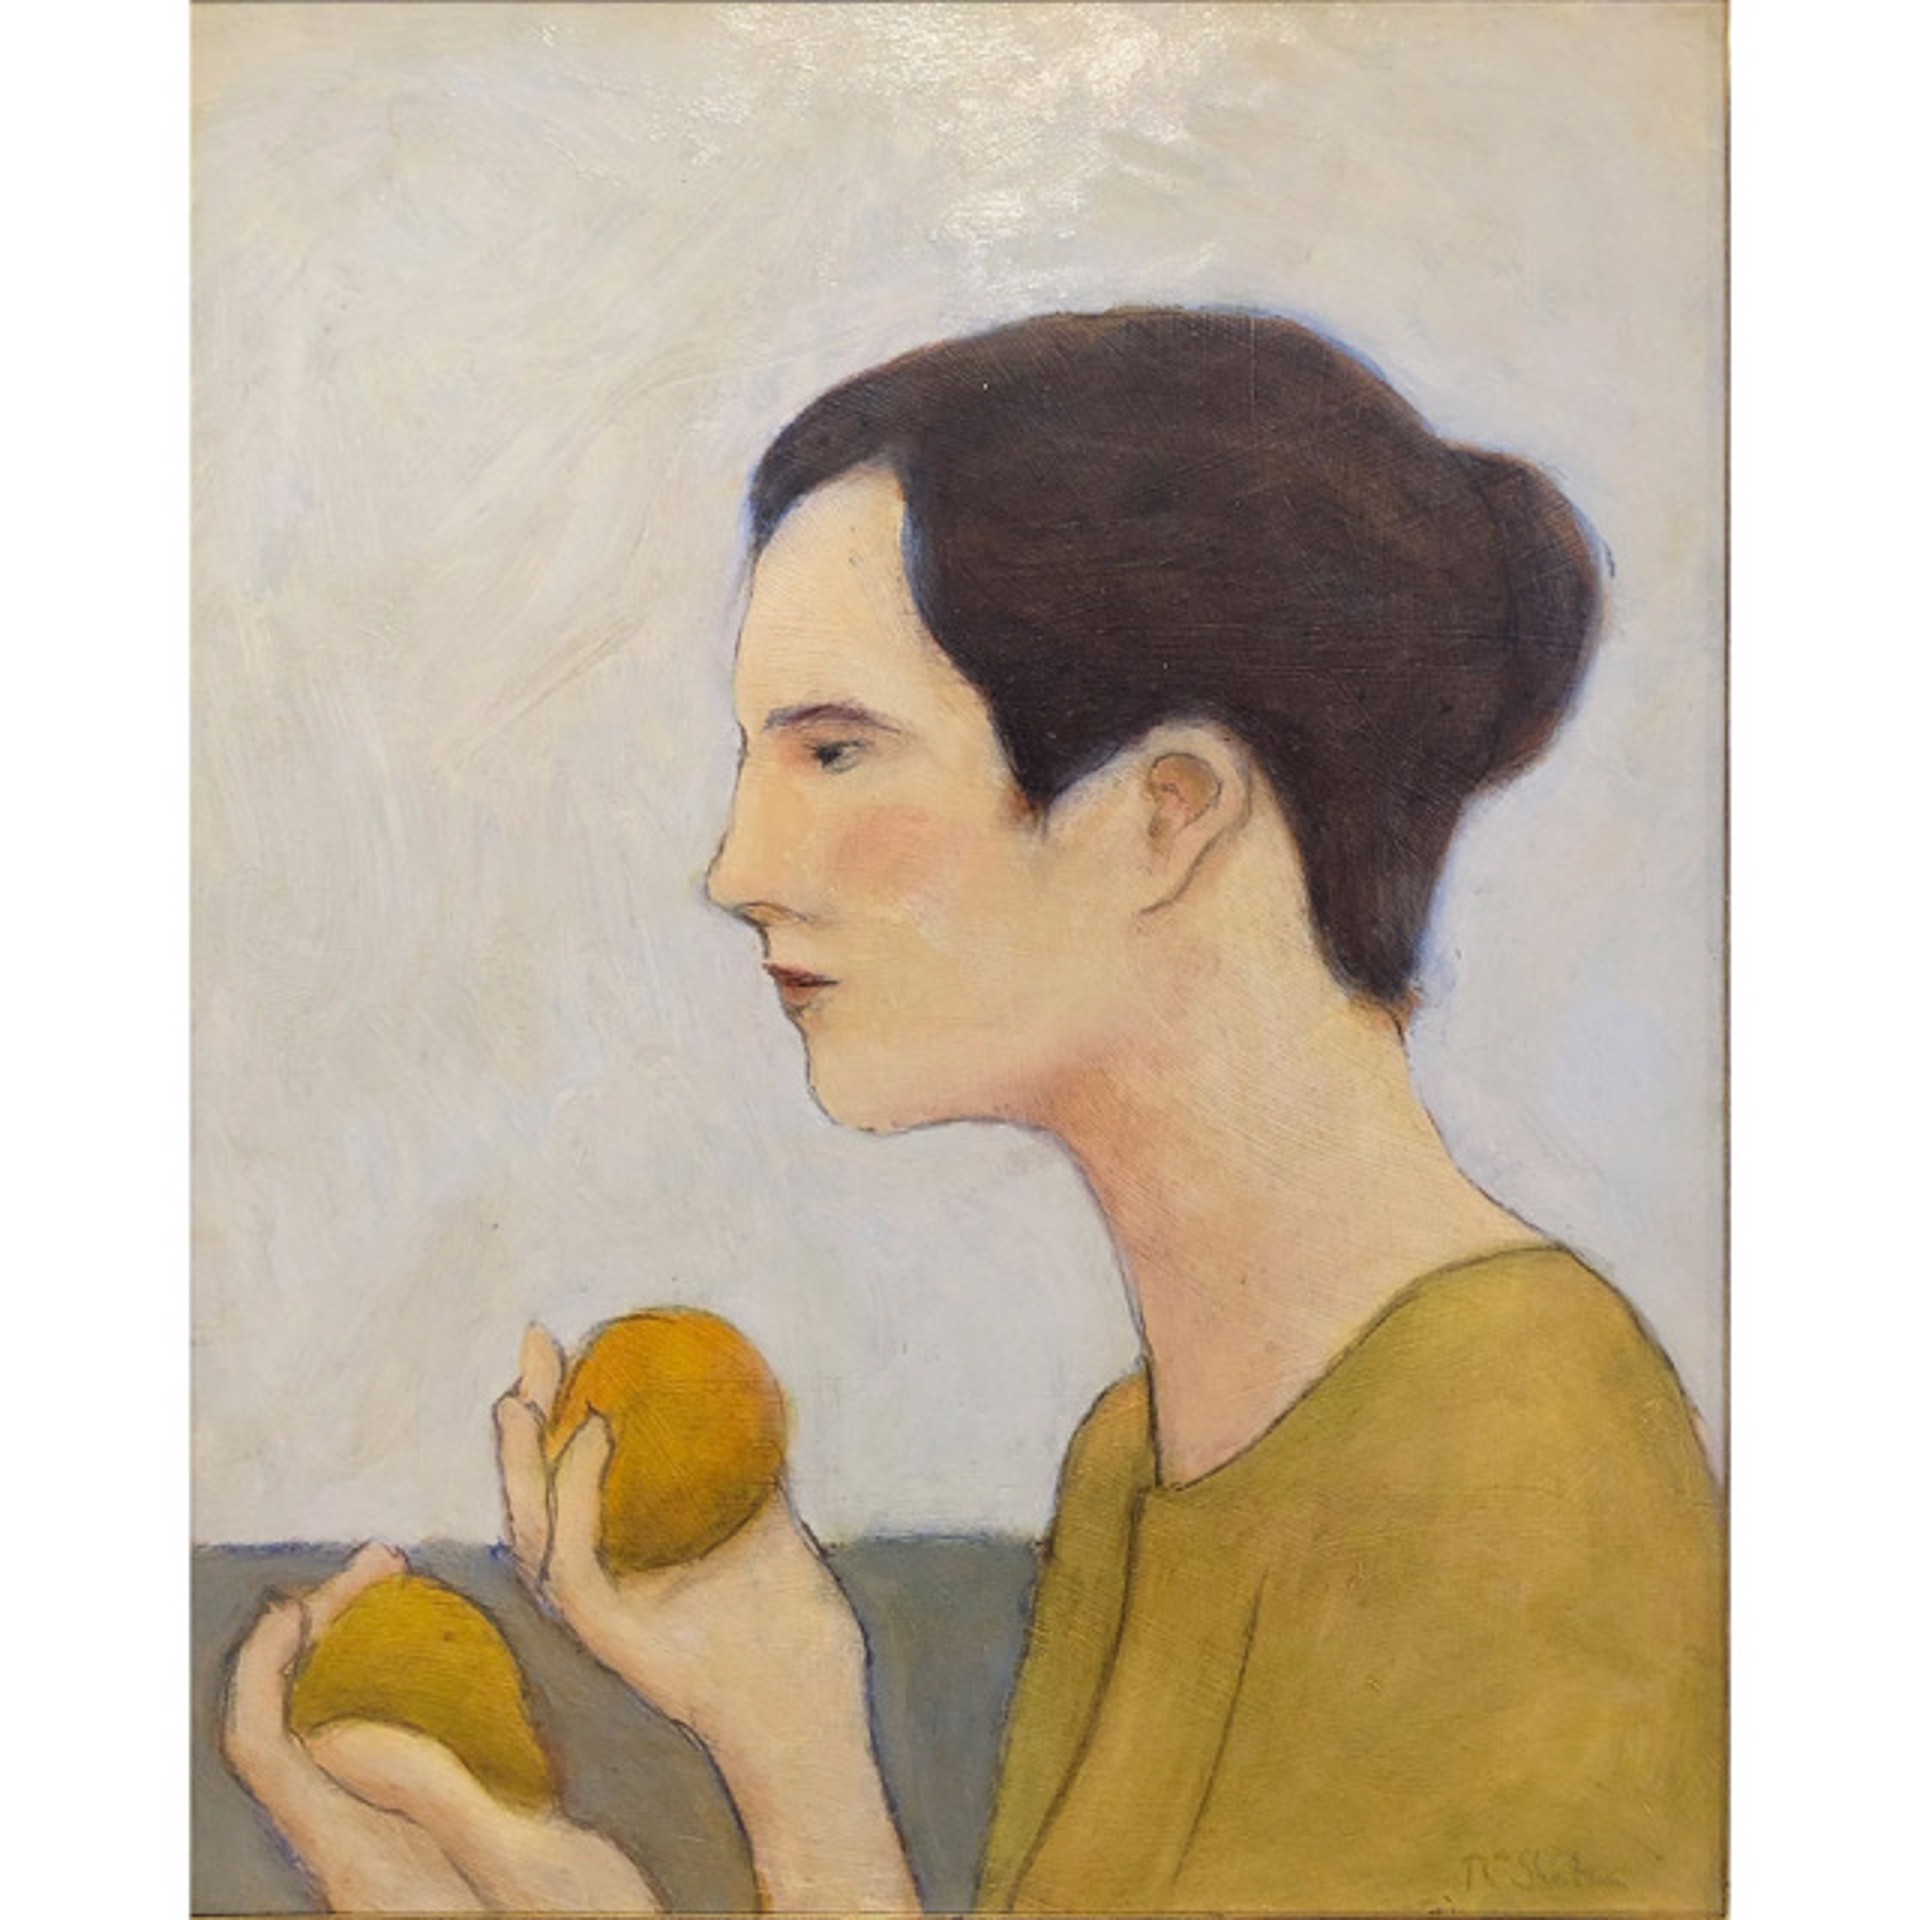 Pear and Mango by Richard Shorten